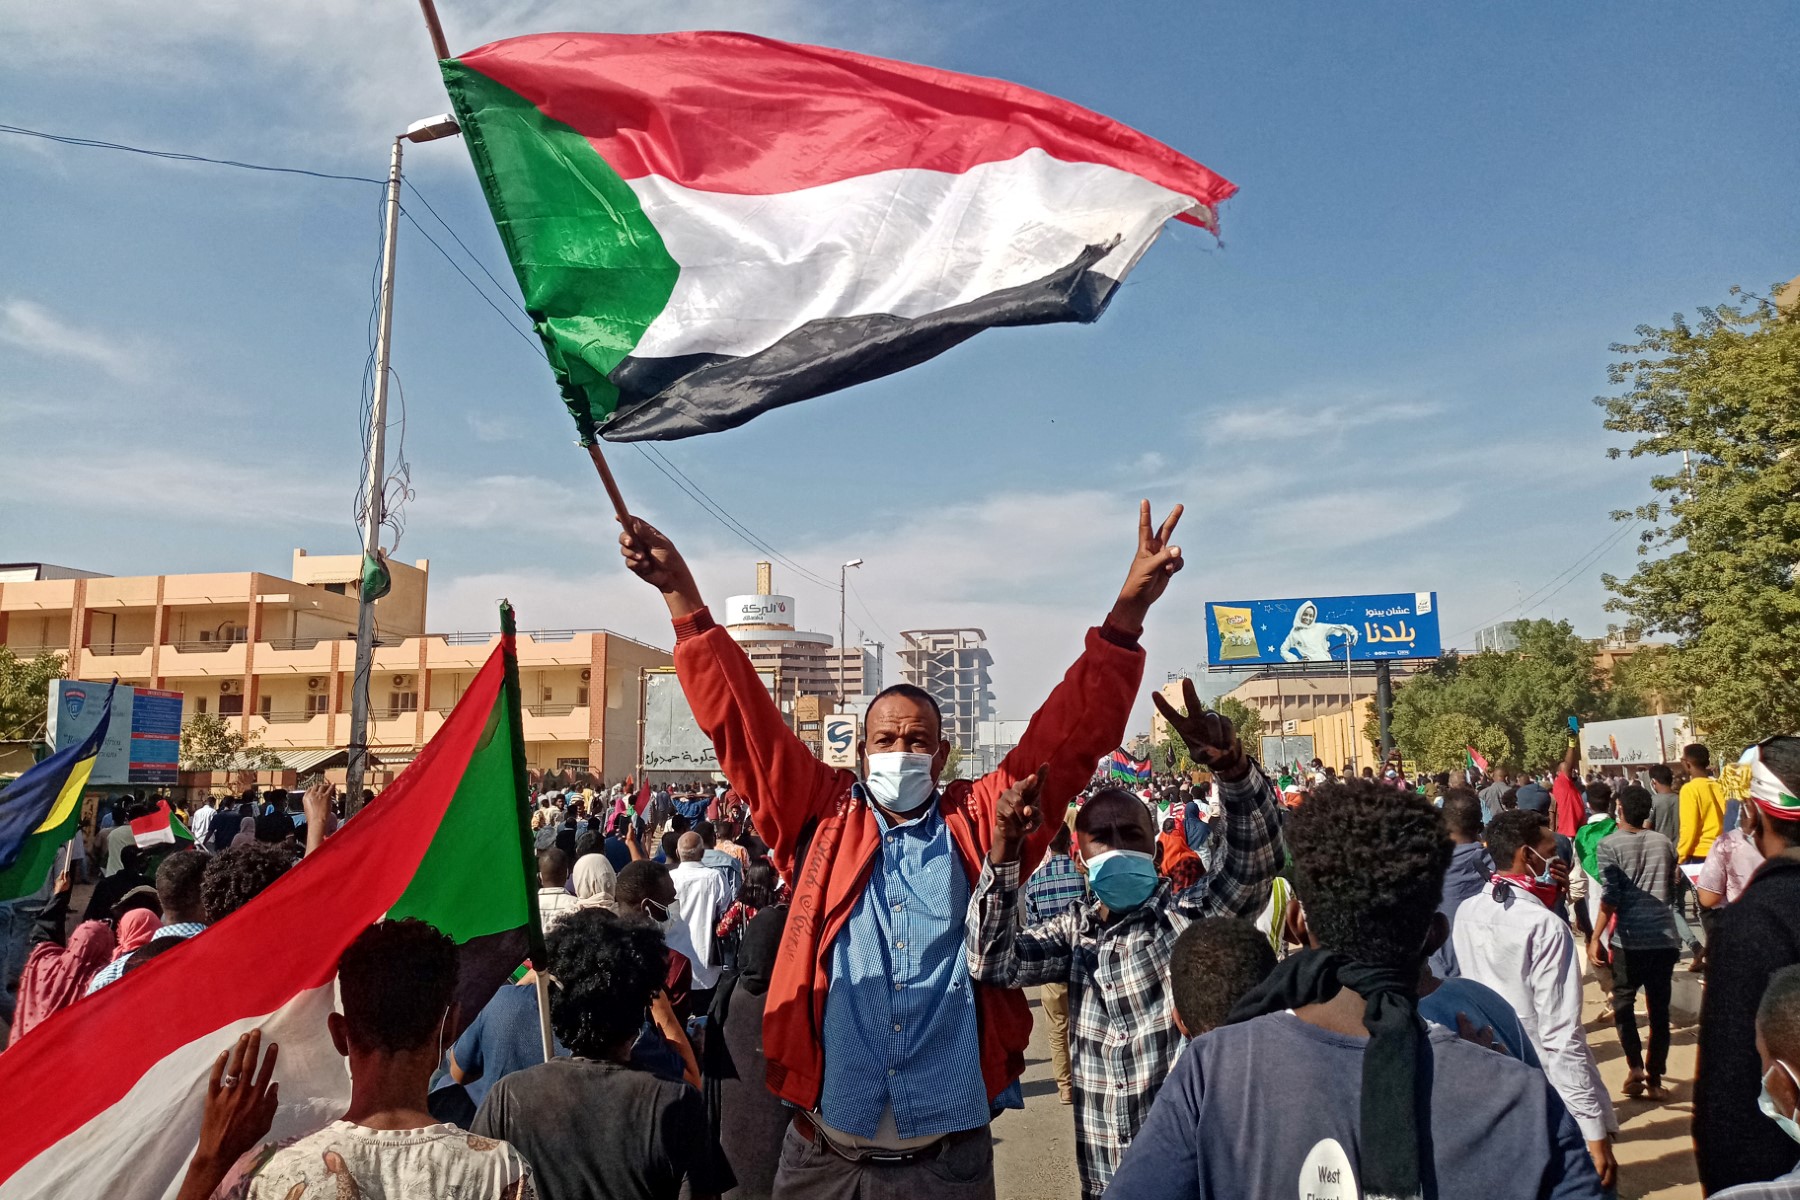 AFP__20211219__9UY269__v3__Preview__TopshotSudanPoliticsDemonstration.jpg